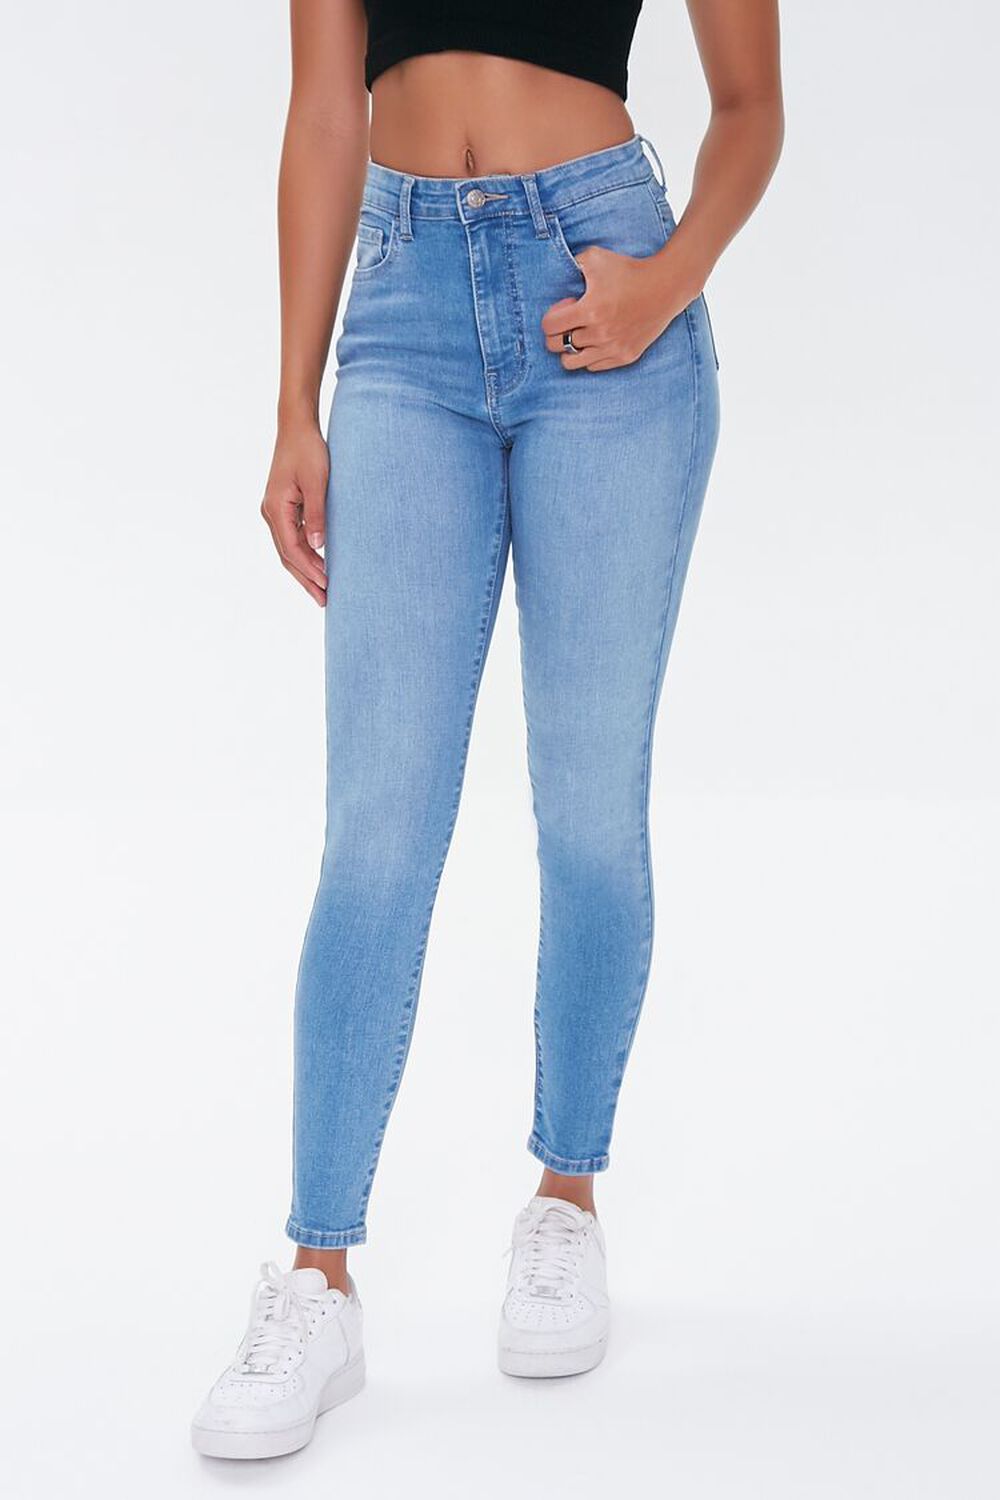 MEDIUM DENIM Mid-Rise Skinny Jeans, image 1